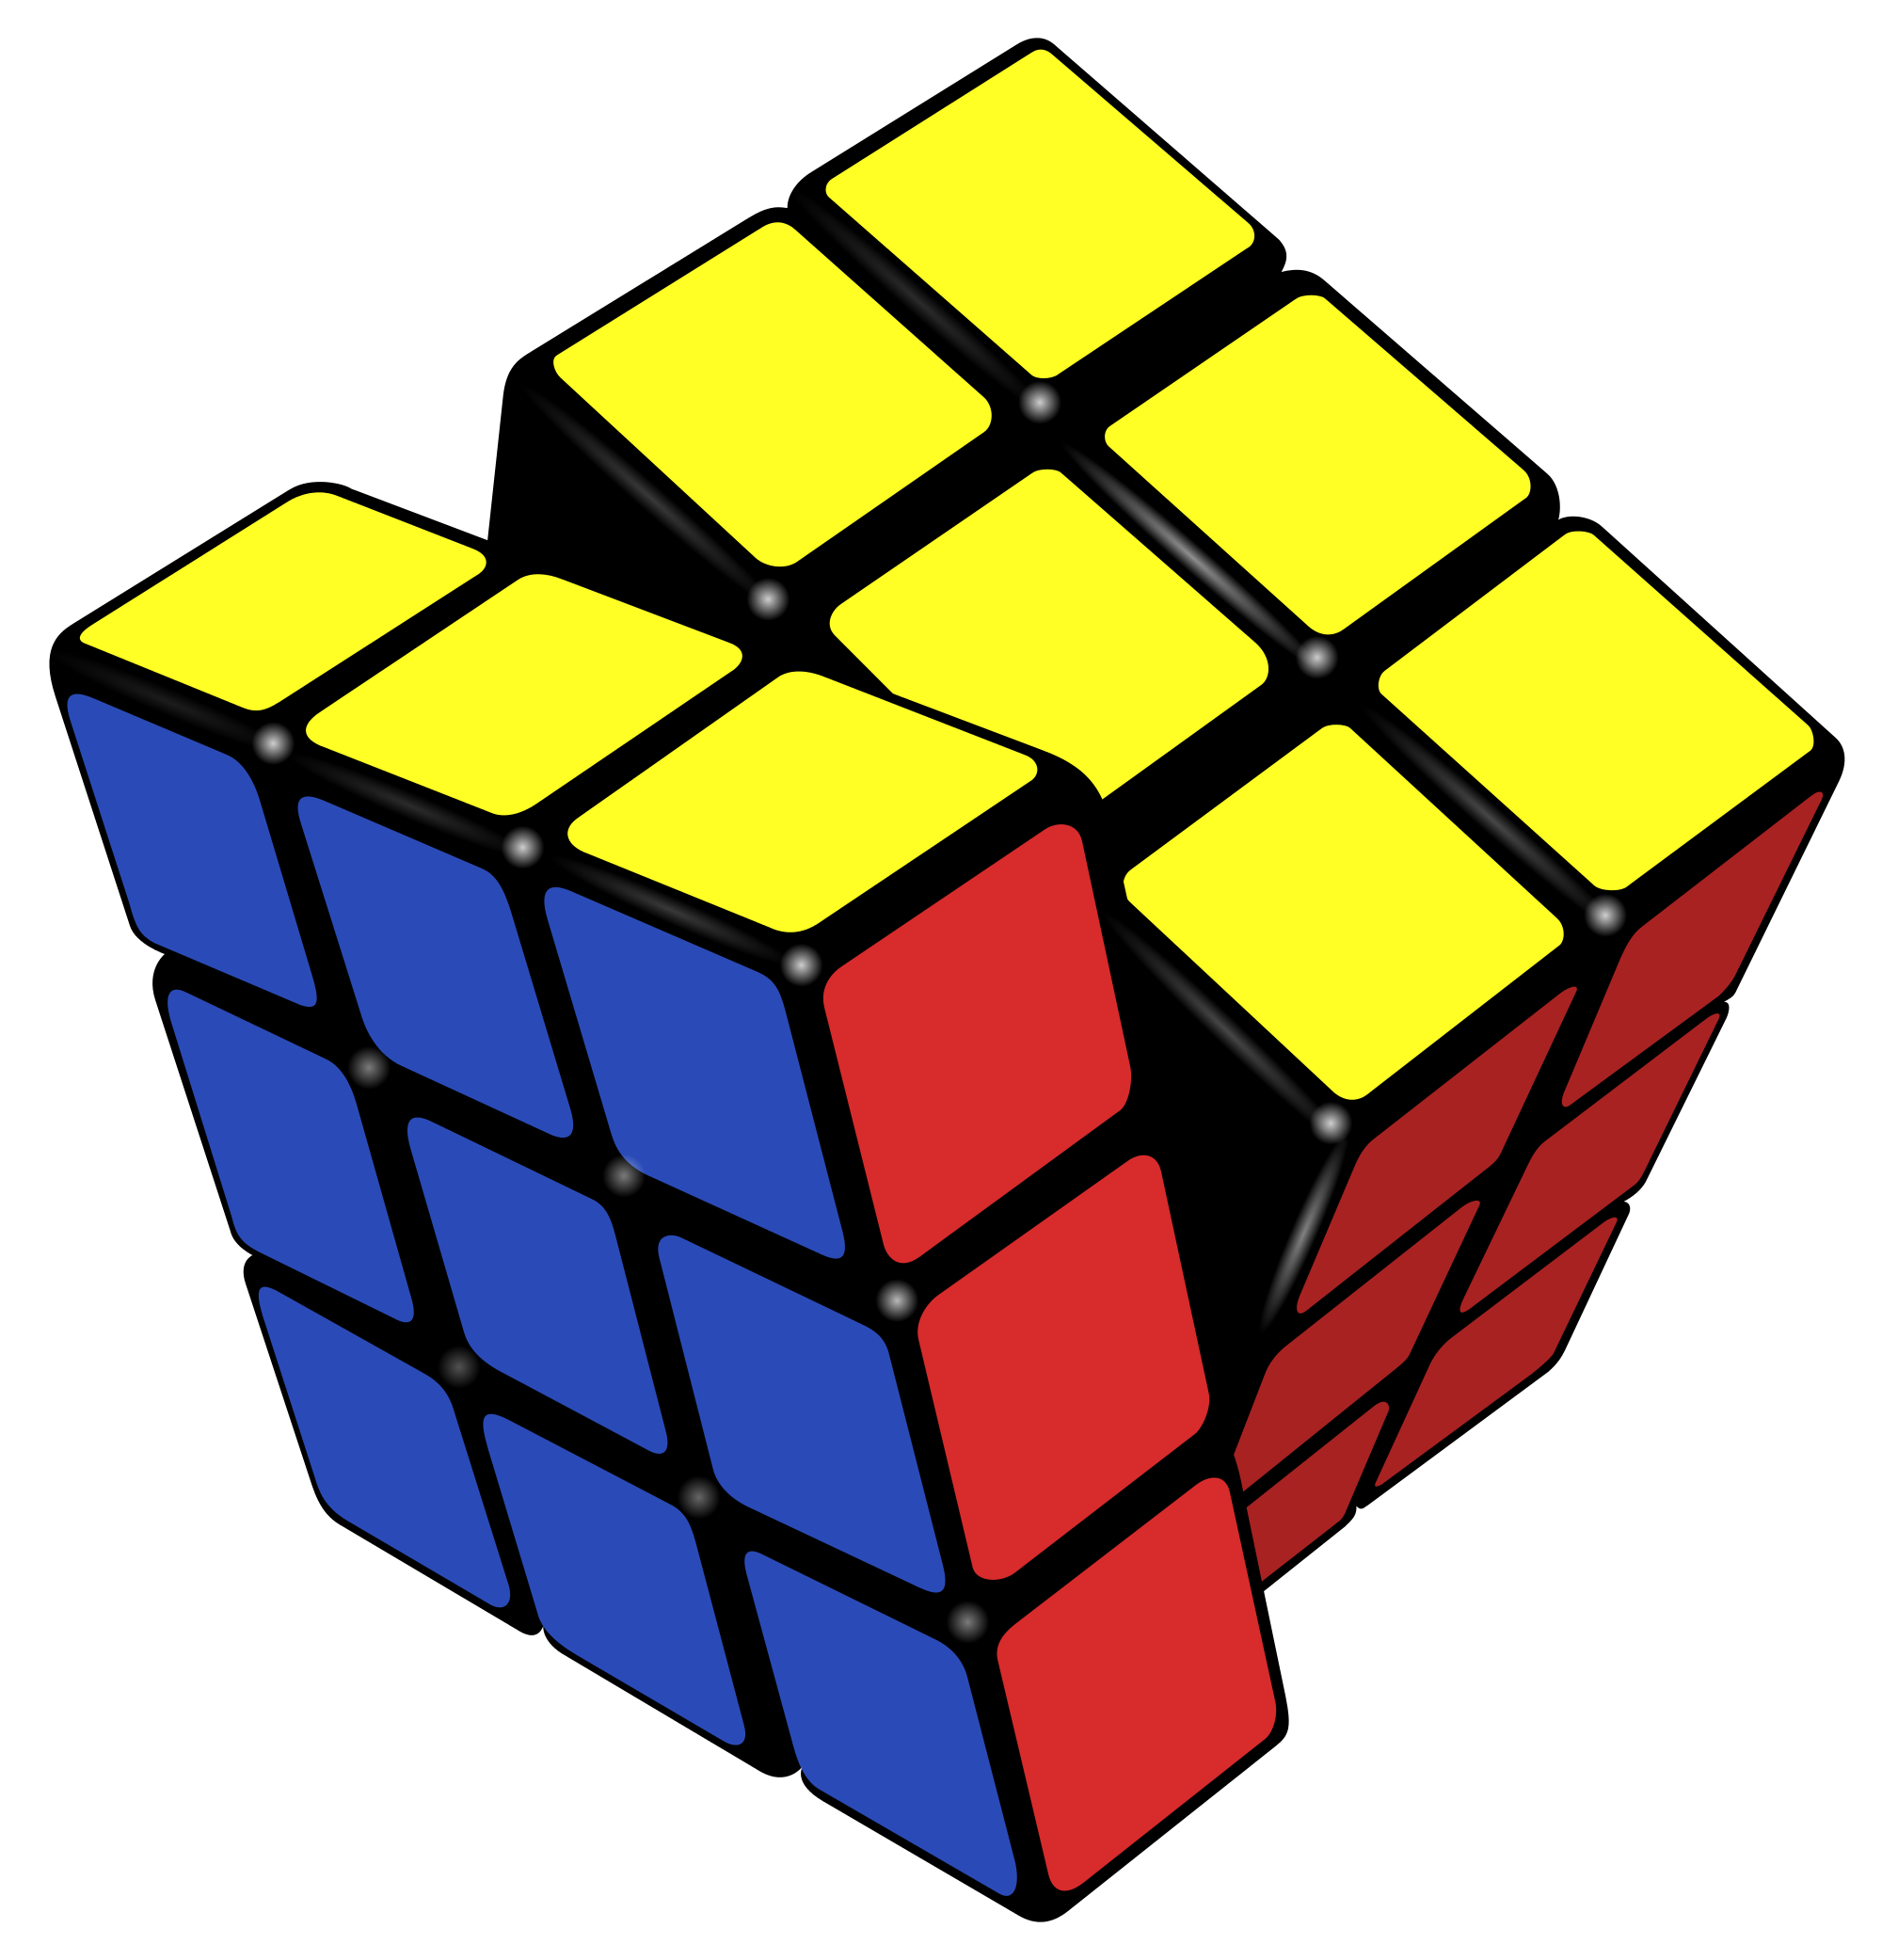 Rubik's Cube PNG Image - PurePNG | Free transparent CC0 ...